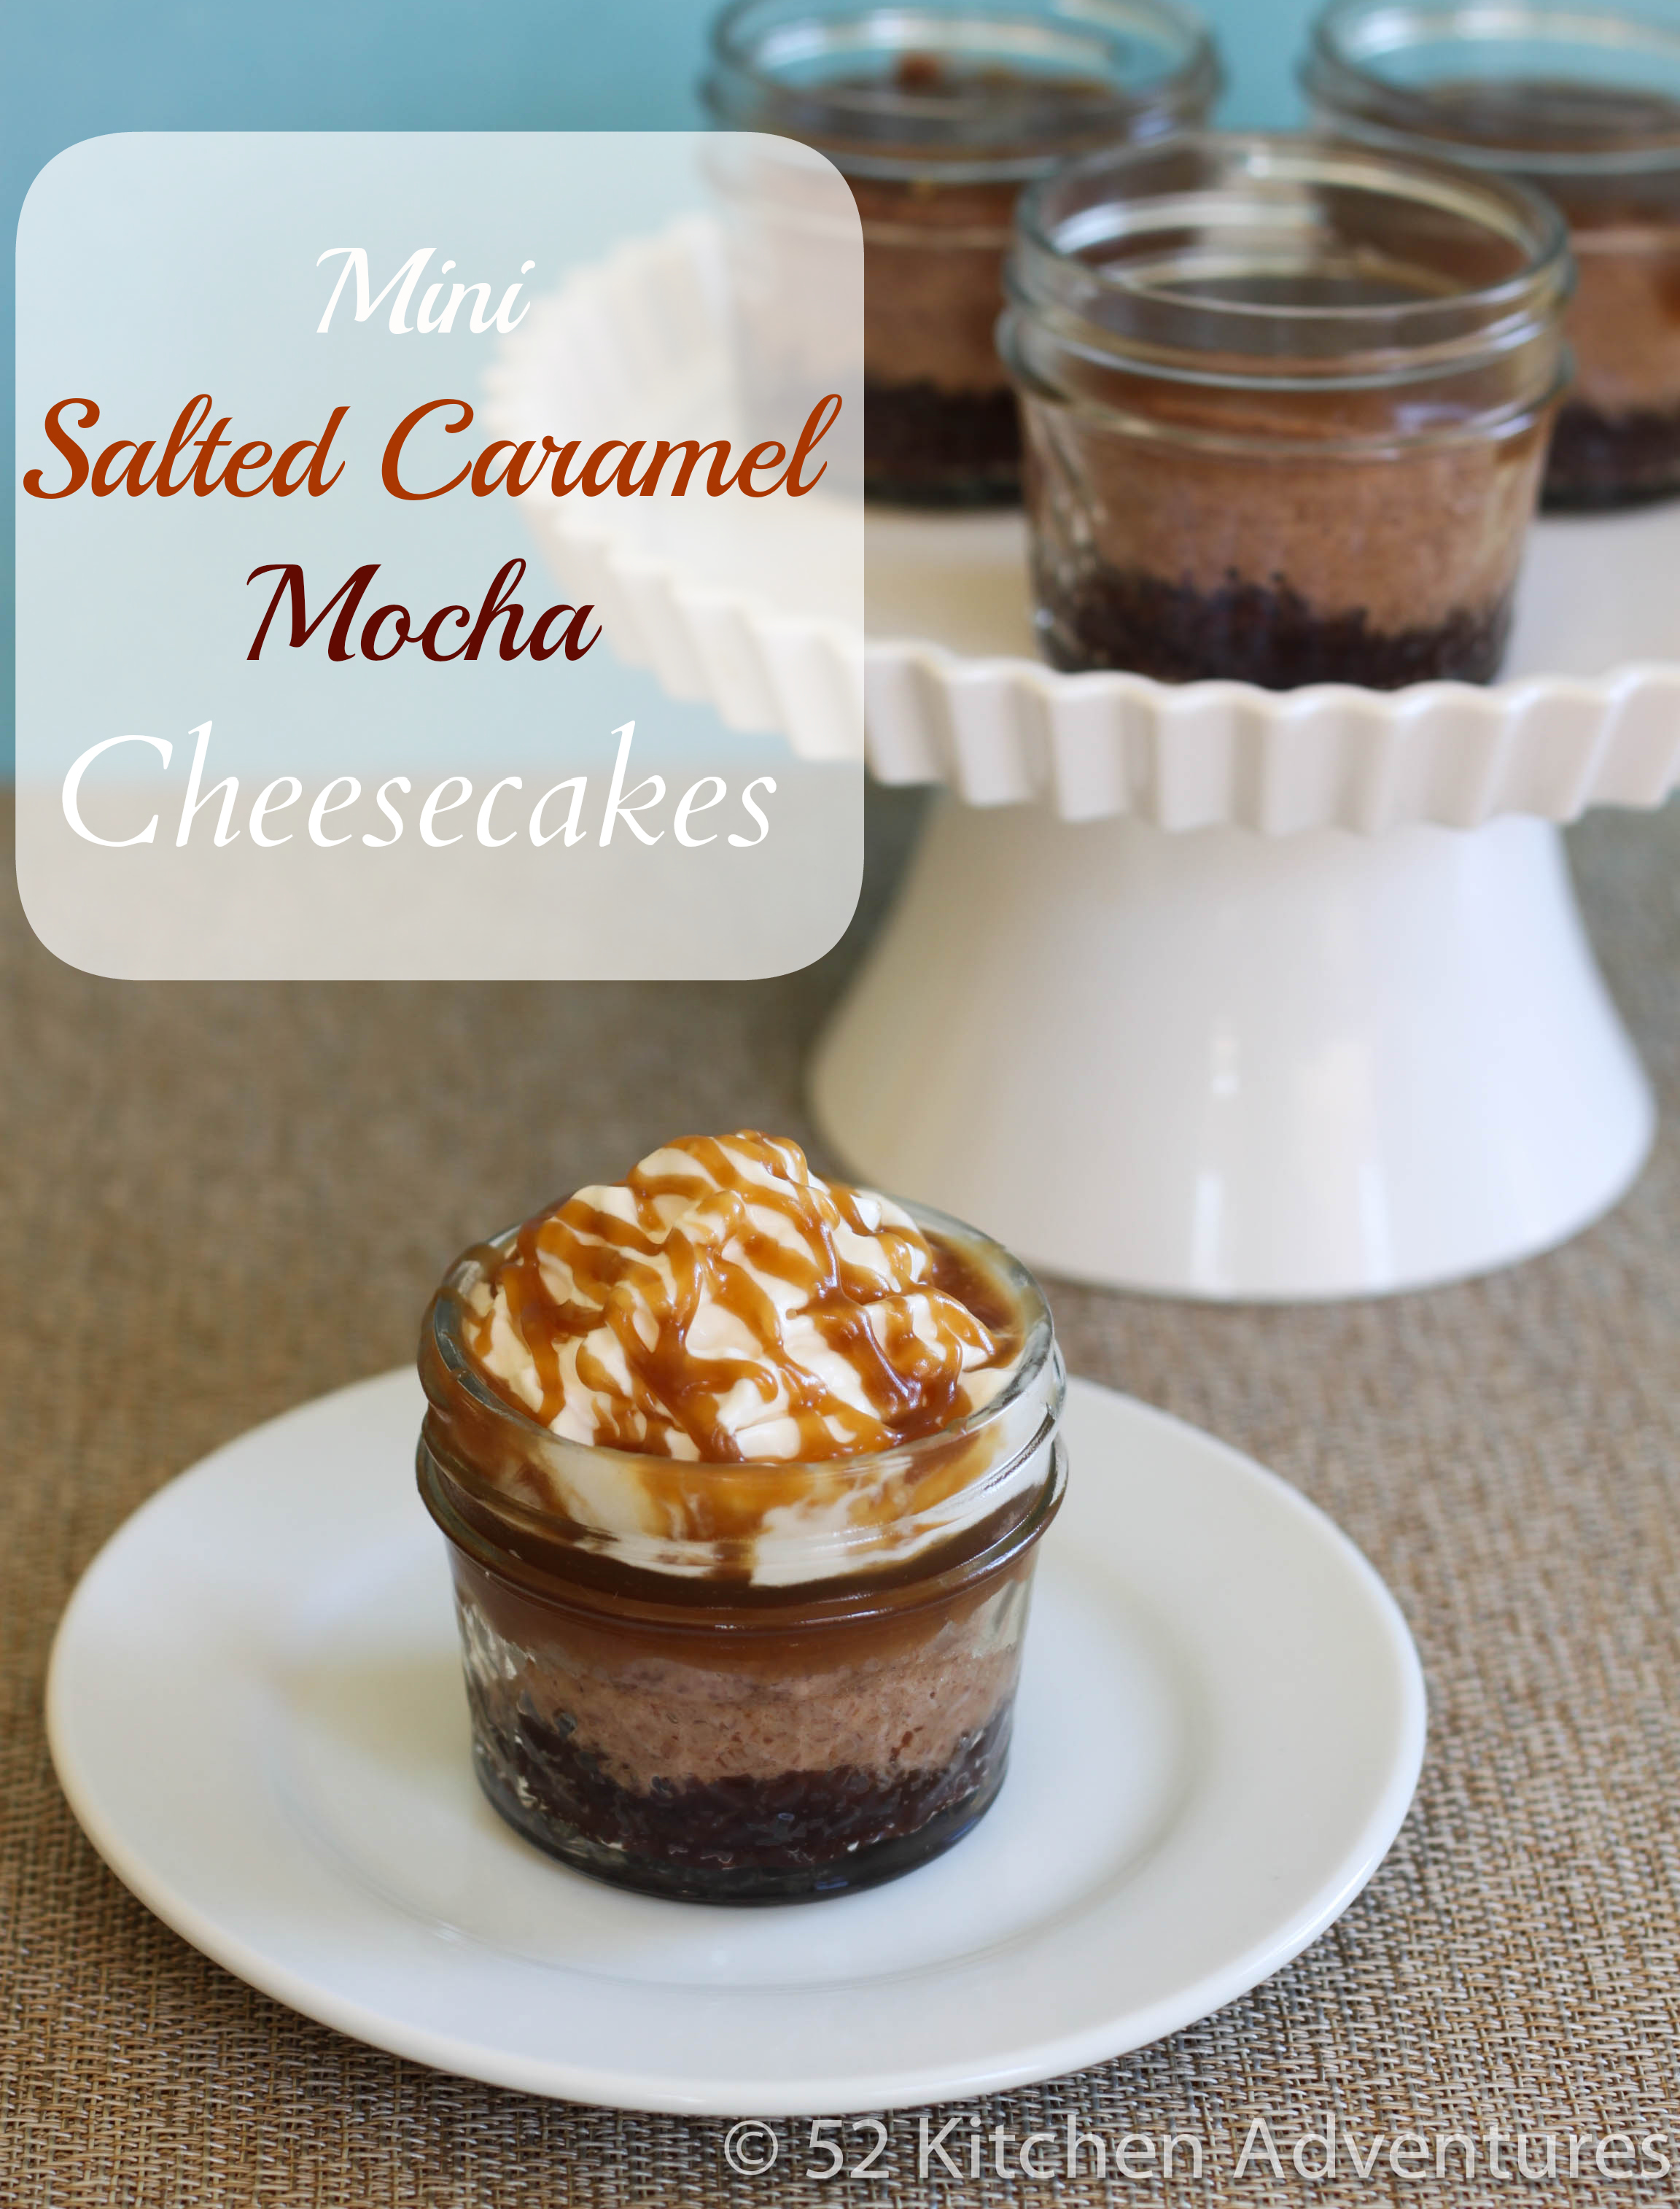 Mini Salted Caramel Mocha Cheesecakes